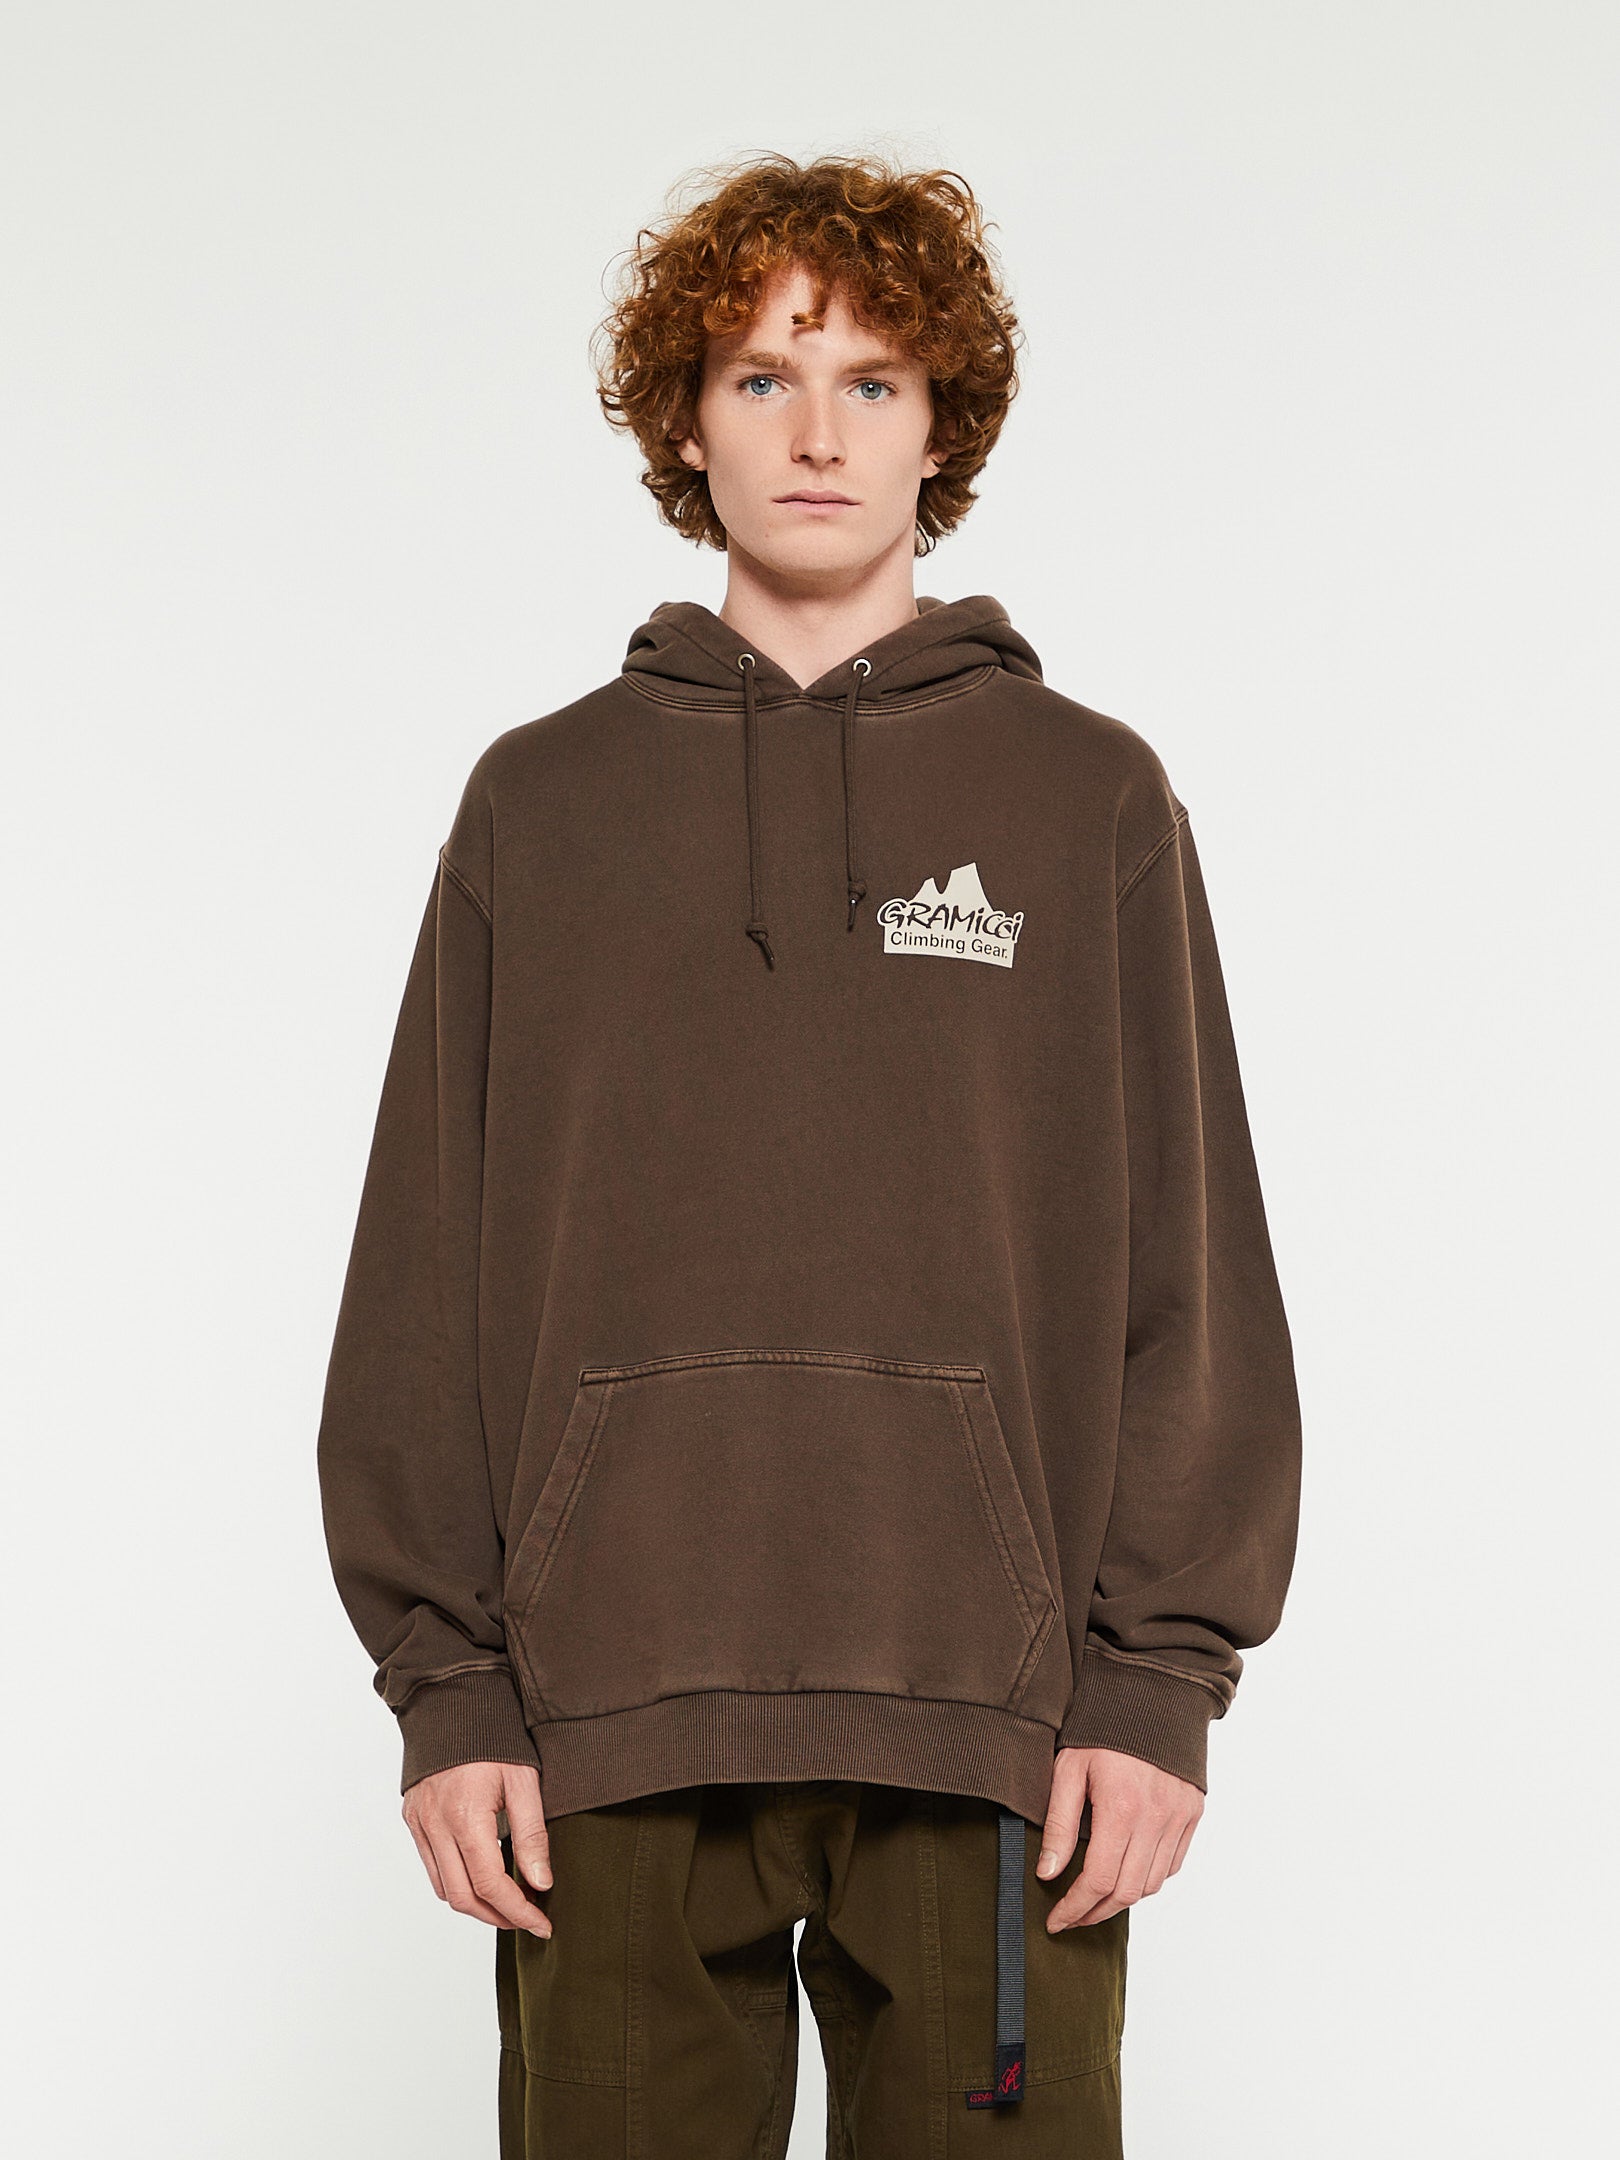 Gramicci - Climbing Gear Hooded Sweatshirt in Brown